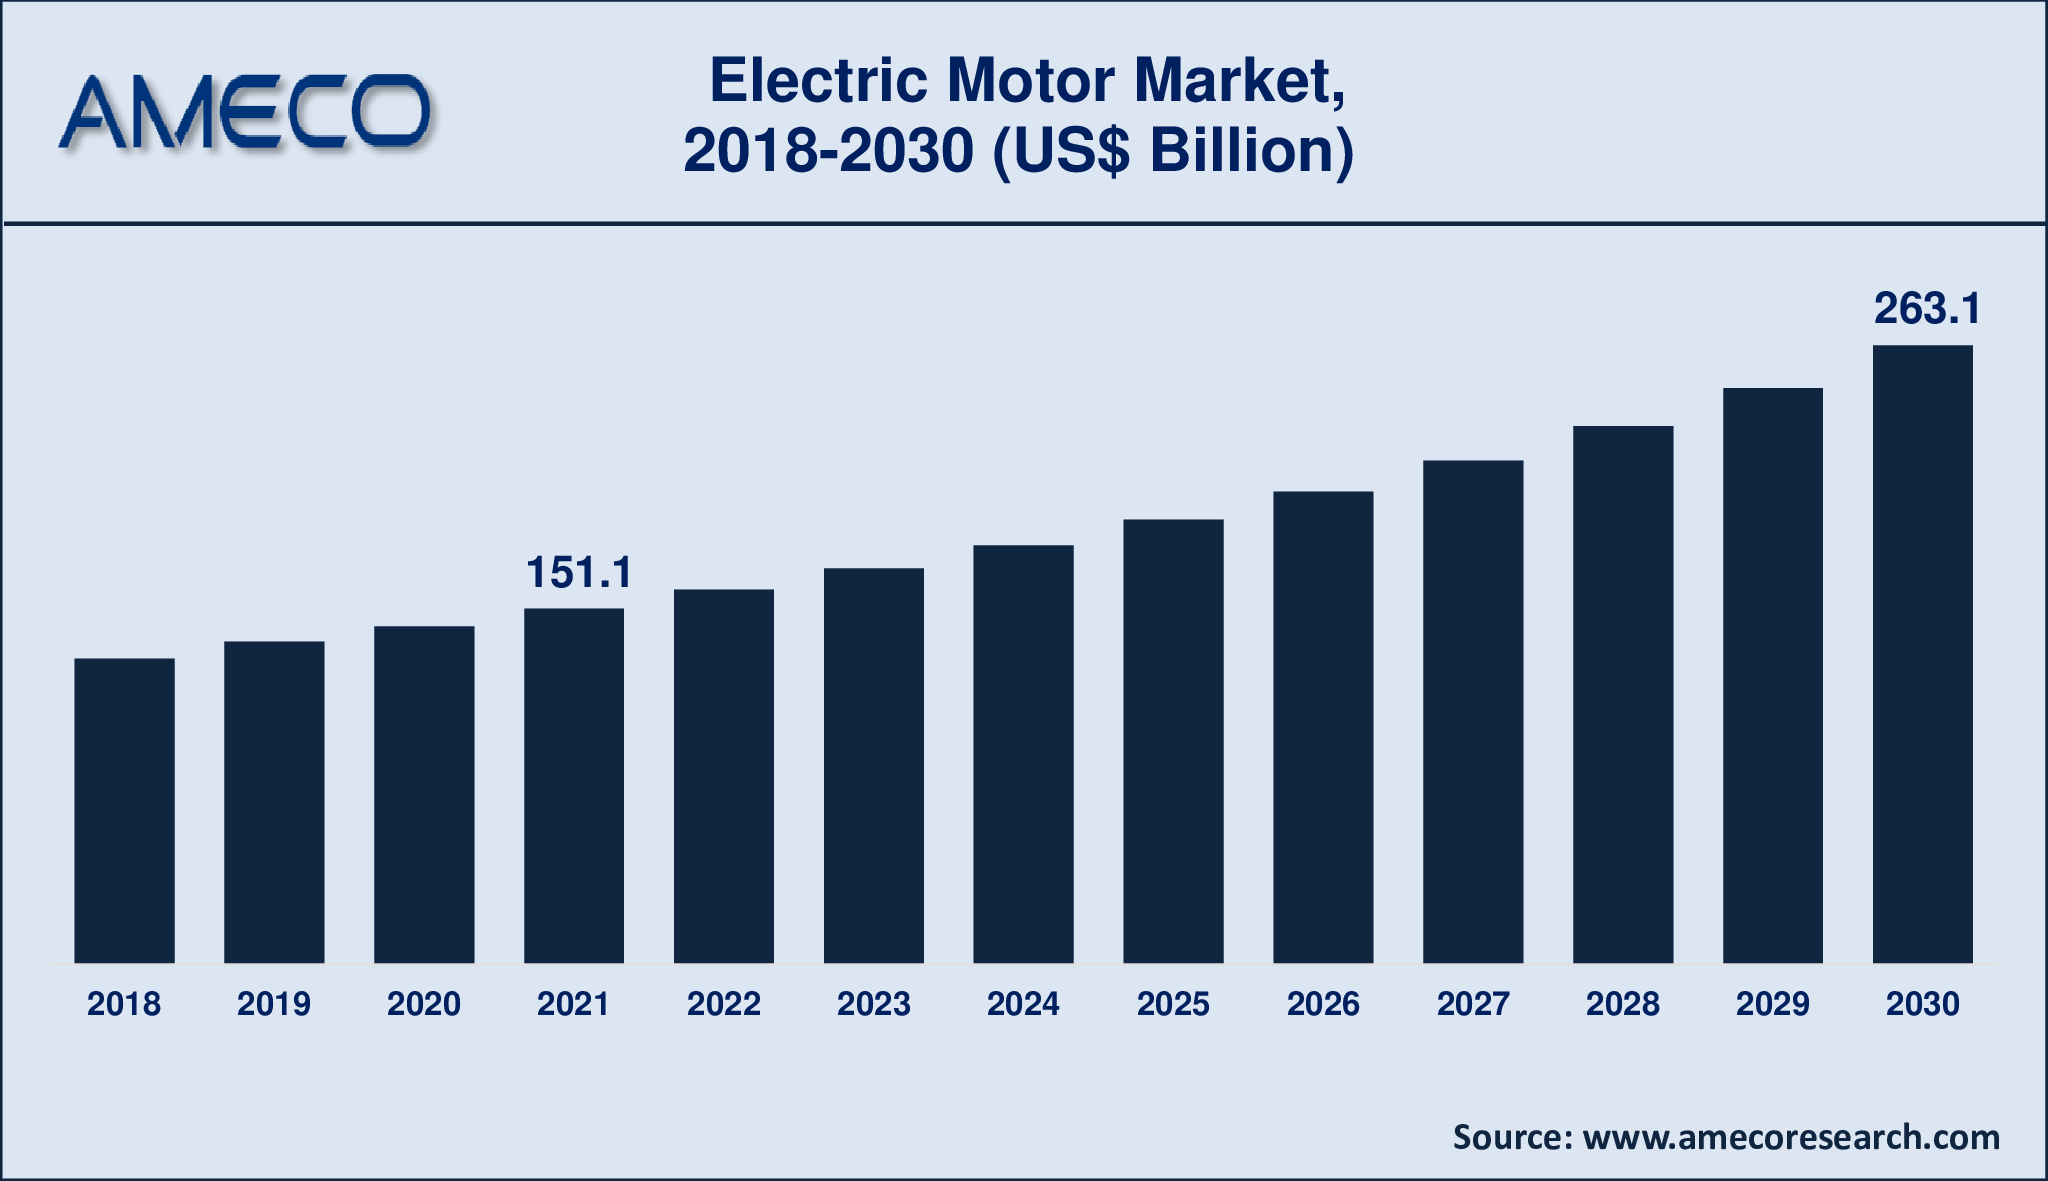 Electric Motor Market Dynamics